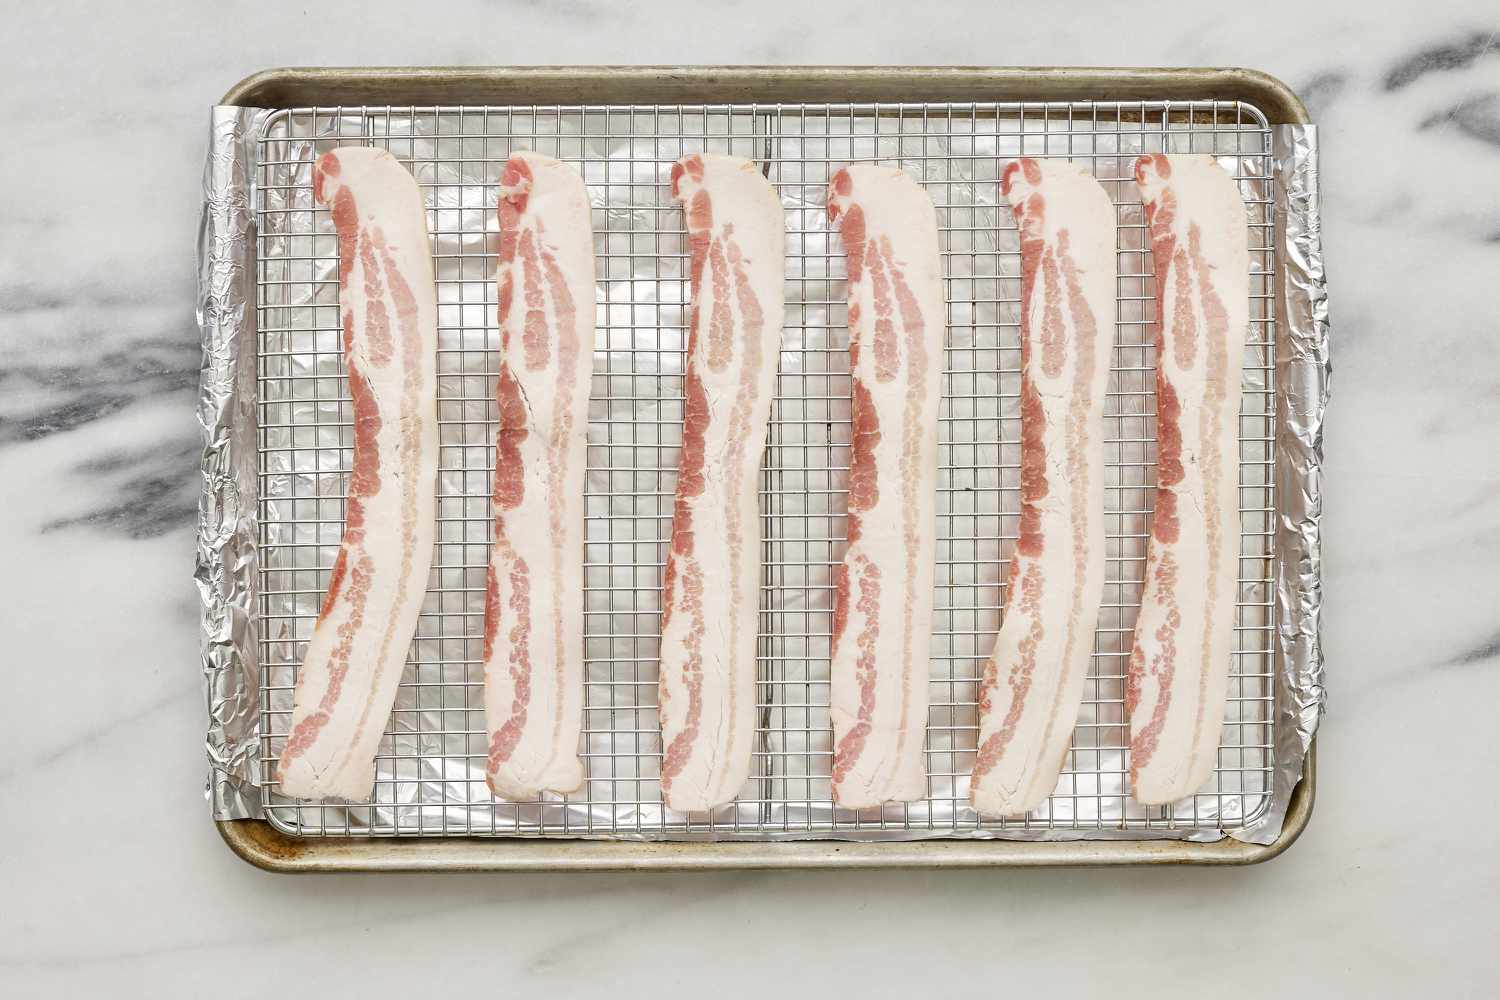 bacon on rack resting on foil lined baking sheet